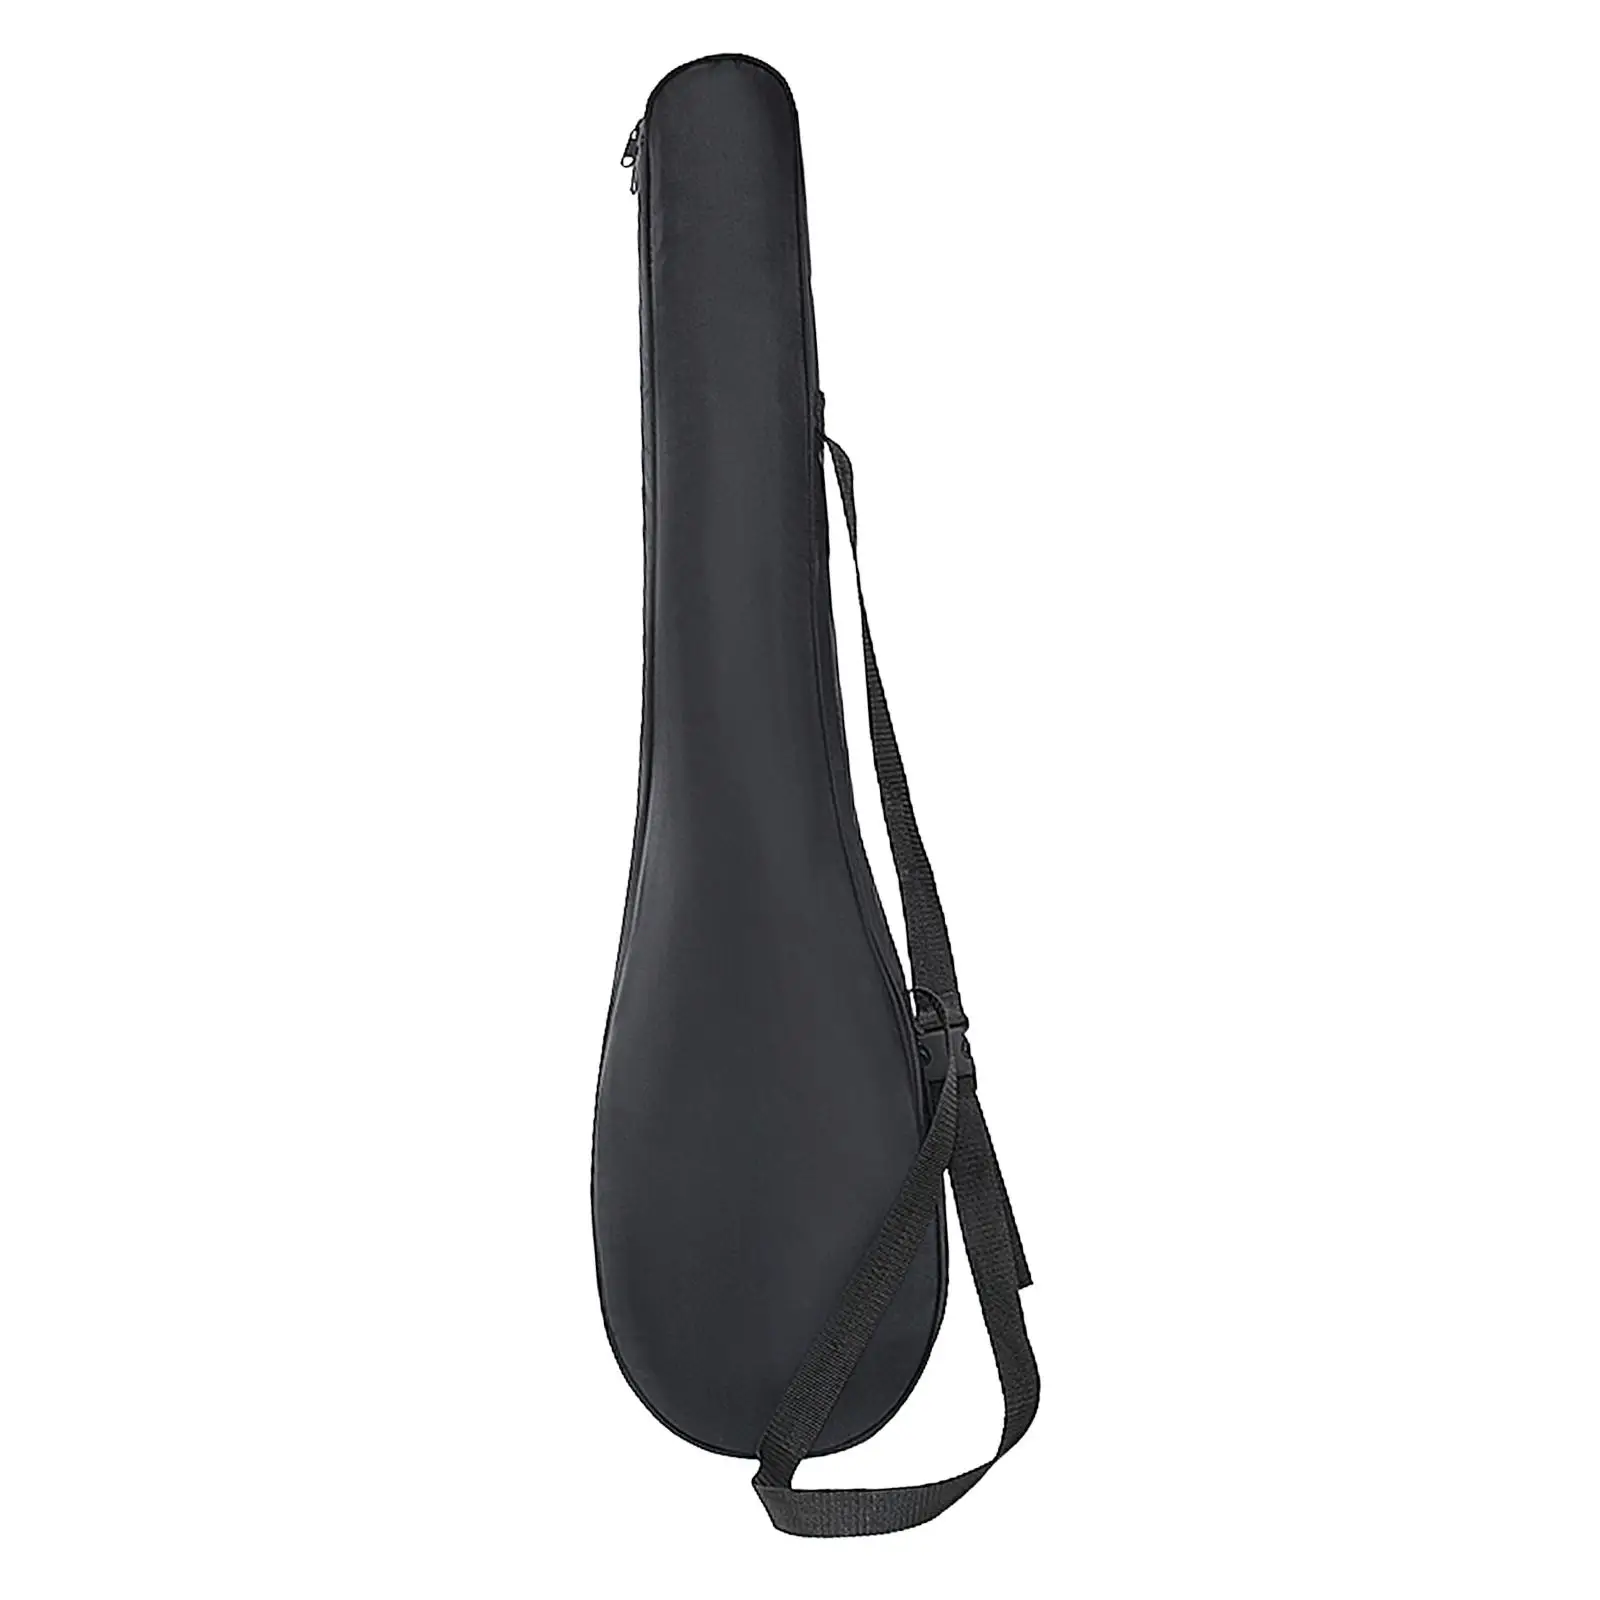 Kayak Paddle Bag for Split Paddle Wear Resistant Canoe Paddle Bag Kayak Paddle Cover Oxford Cloth Holder Paddle Carrier Bag